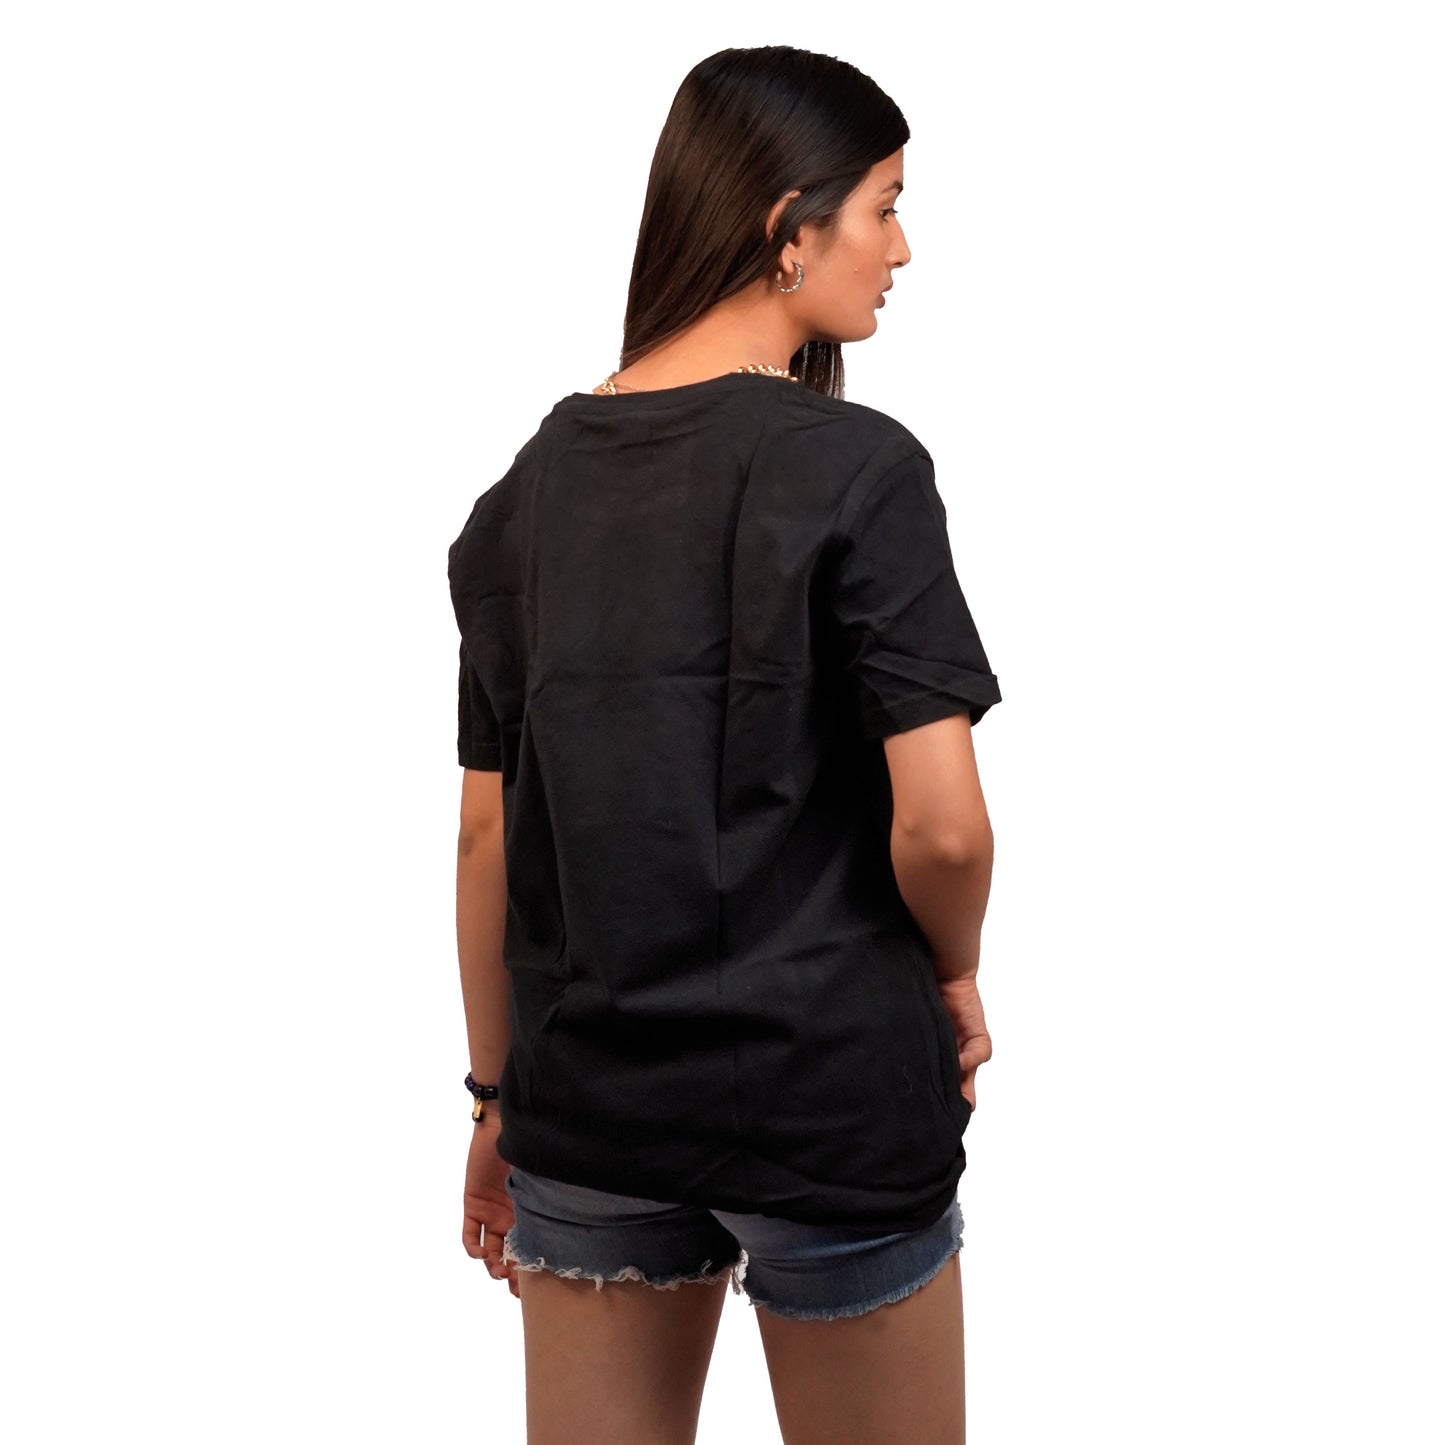 Buoyancy Artists T-shirt In Black Color For Women